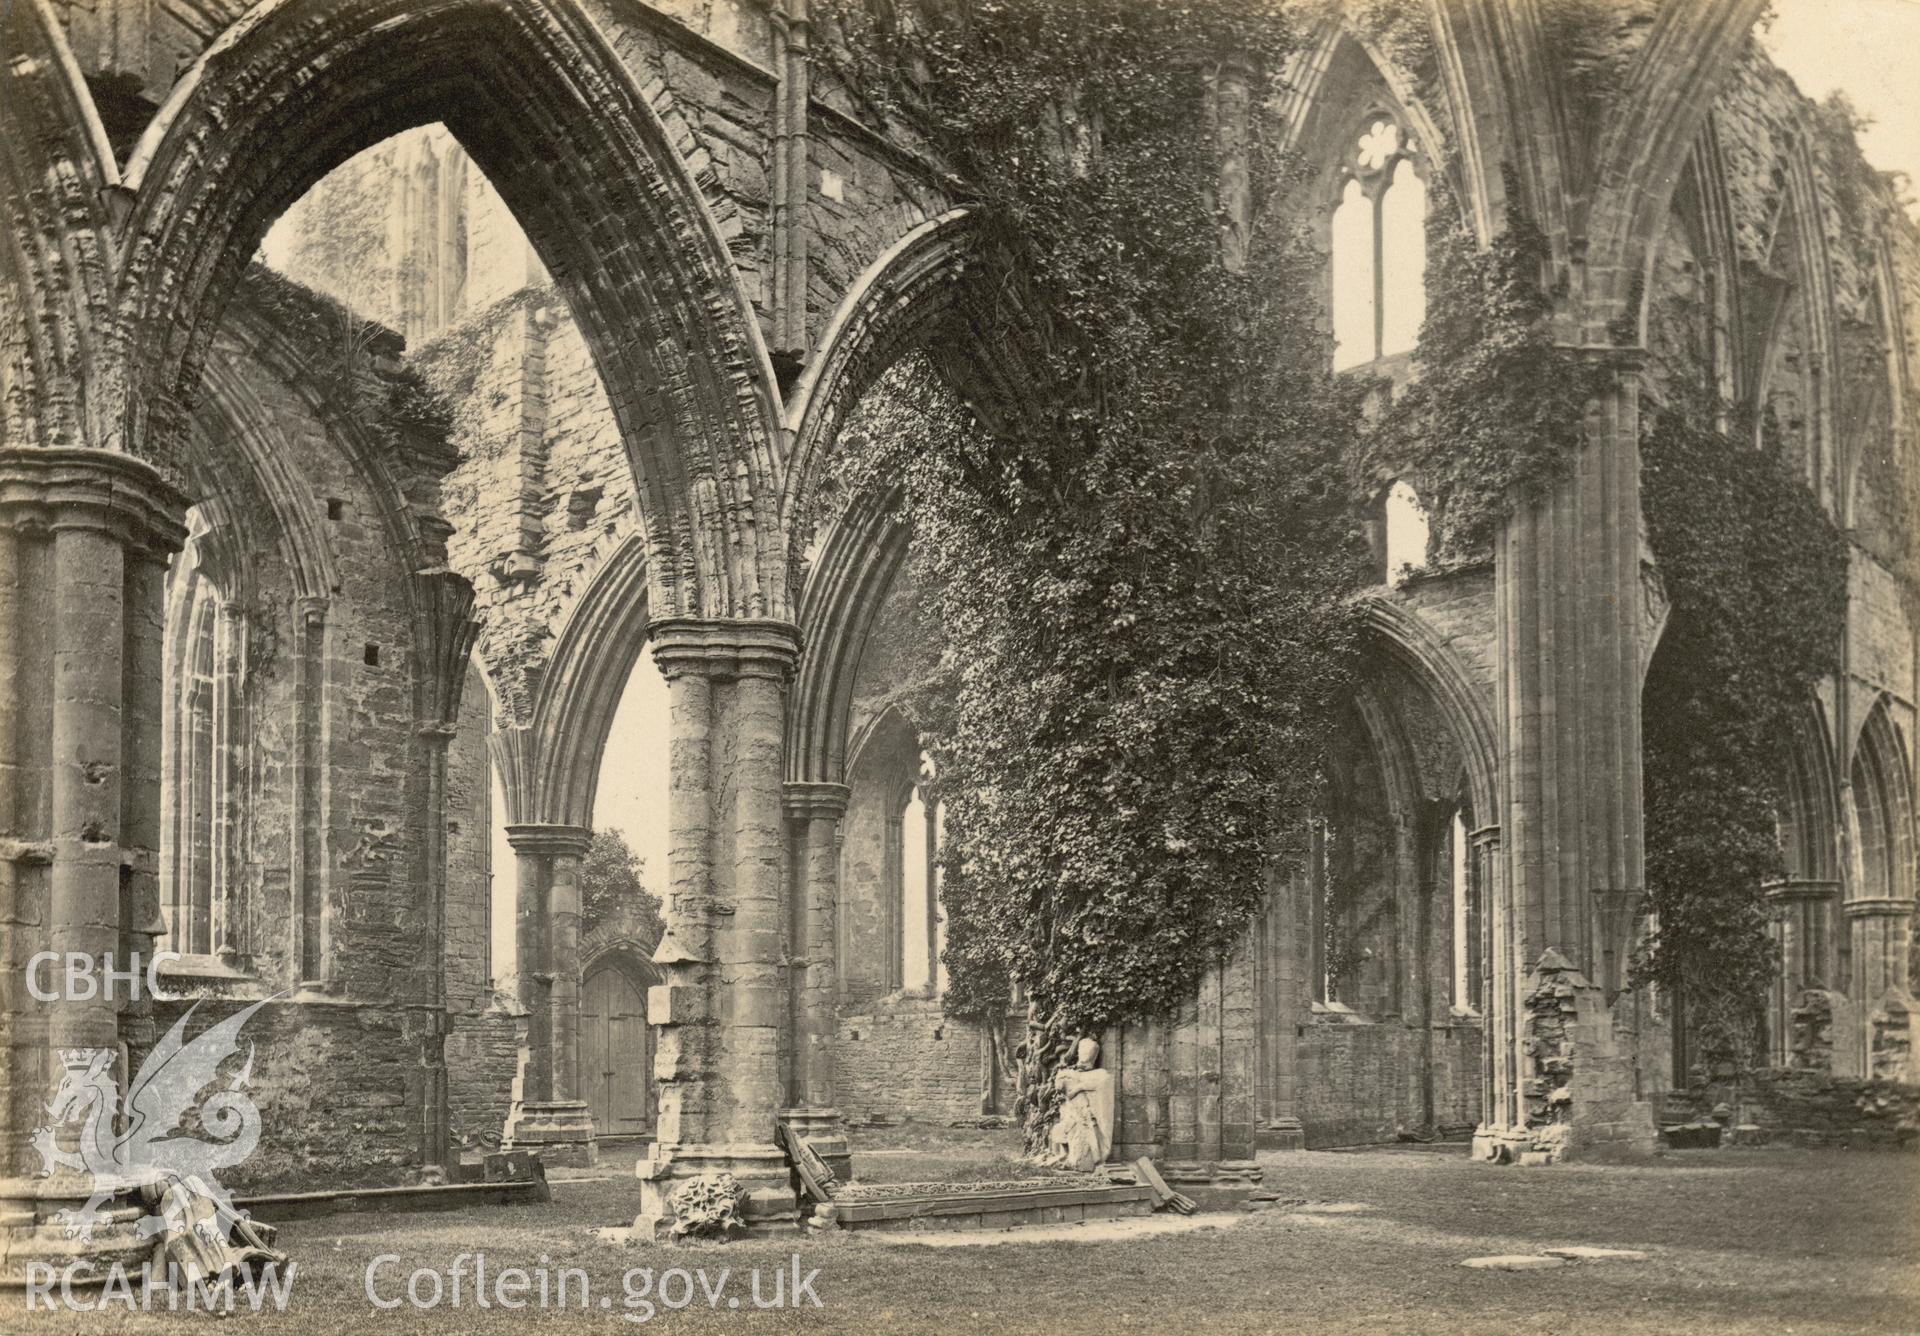 Digital copy of a circa 1870 albumen print showing an interior view of Tintern Abbey looking across the choir.